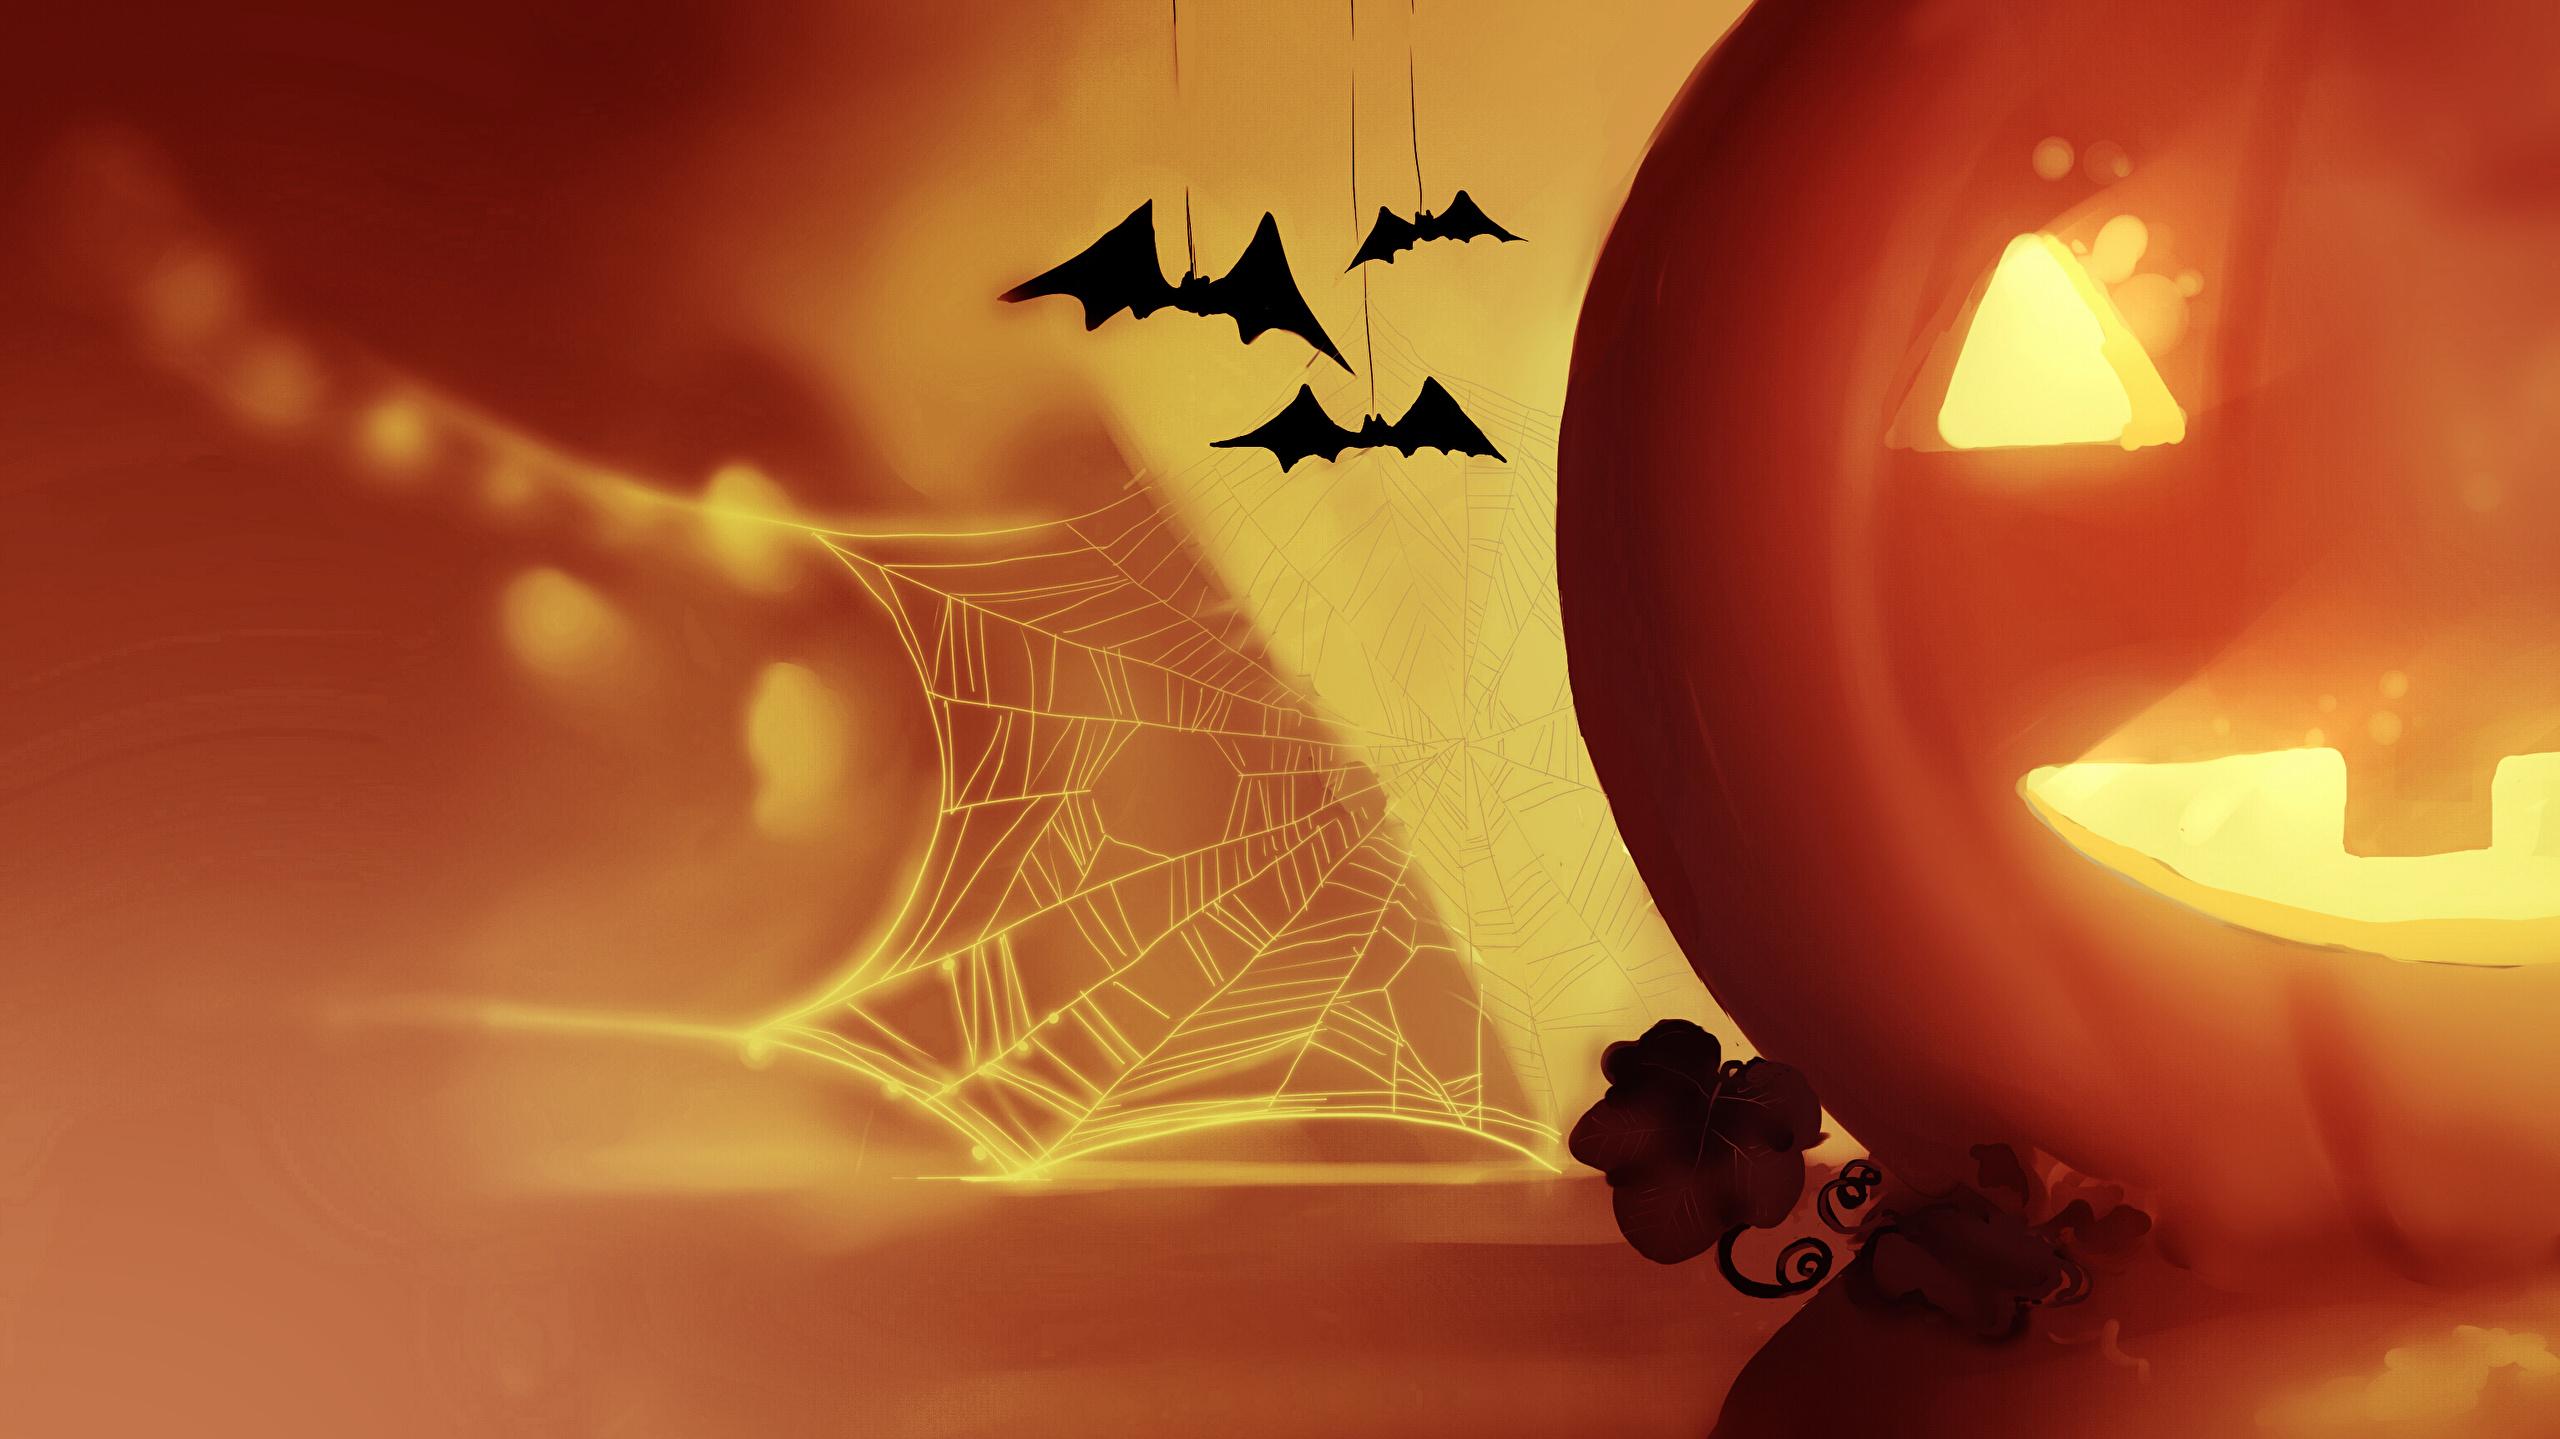 Wallpaper Bats Spider Web Fantasy Pumpkin Halloween